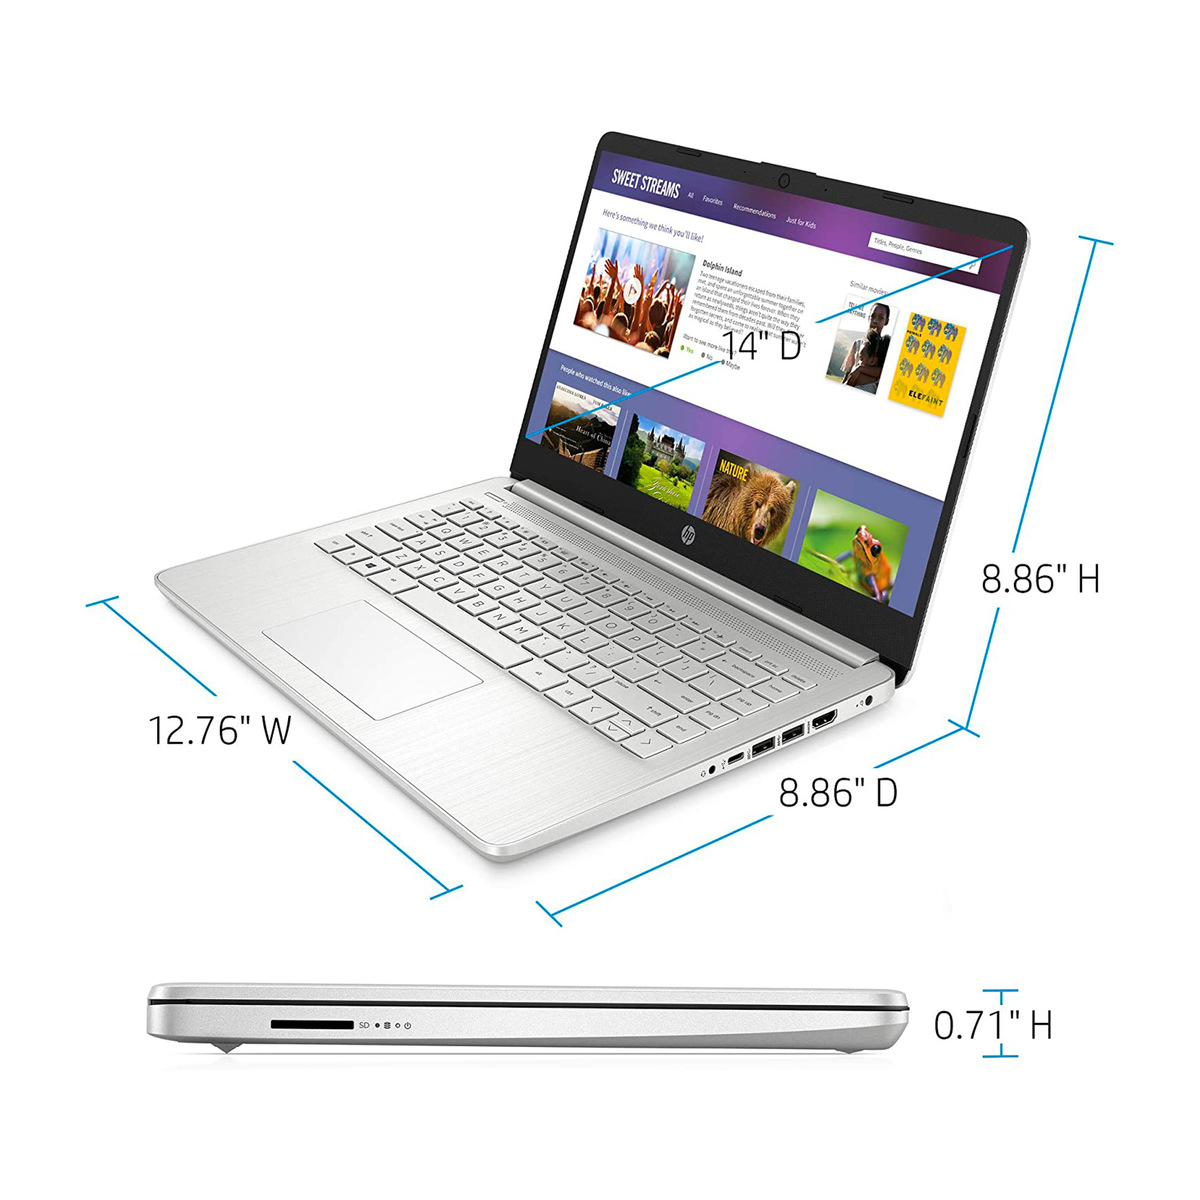 HP Notebook 14-DQ1059WM,Intel Core i5,8GB RAM,256GB SSD,intel HD Graphics,14.0"FHD LED,Windows 10